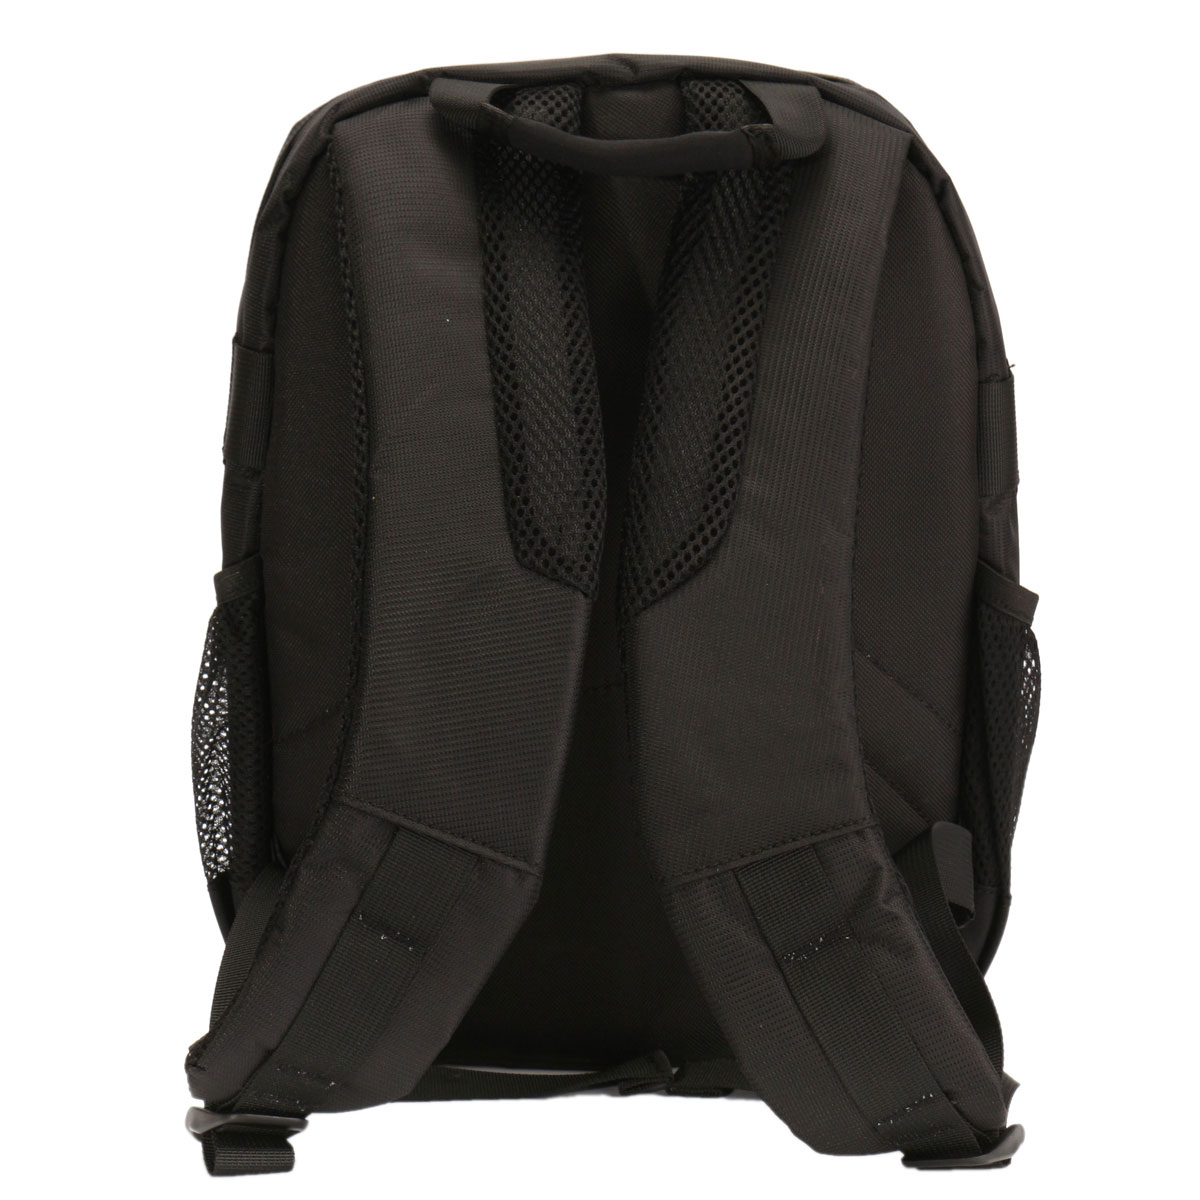 DL-B018 Waterproof Backpack Rucksack Case Bag for DSLR Caerma 14